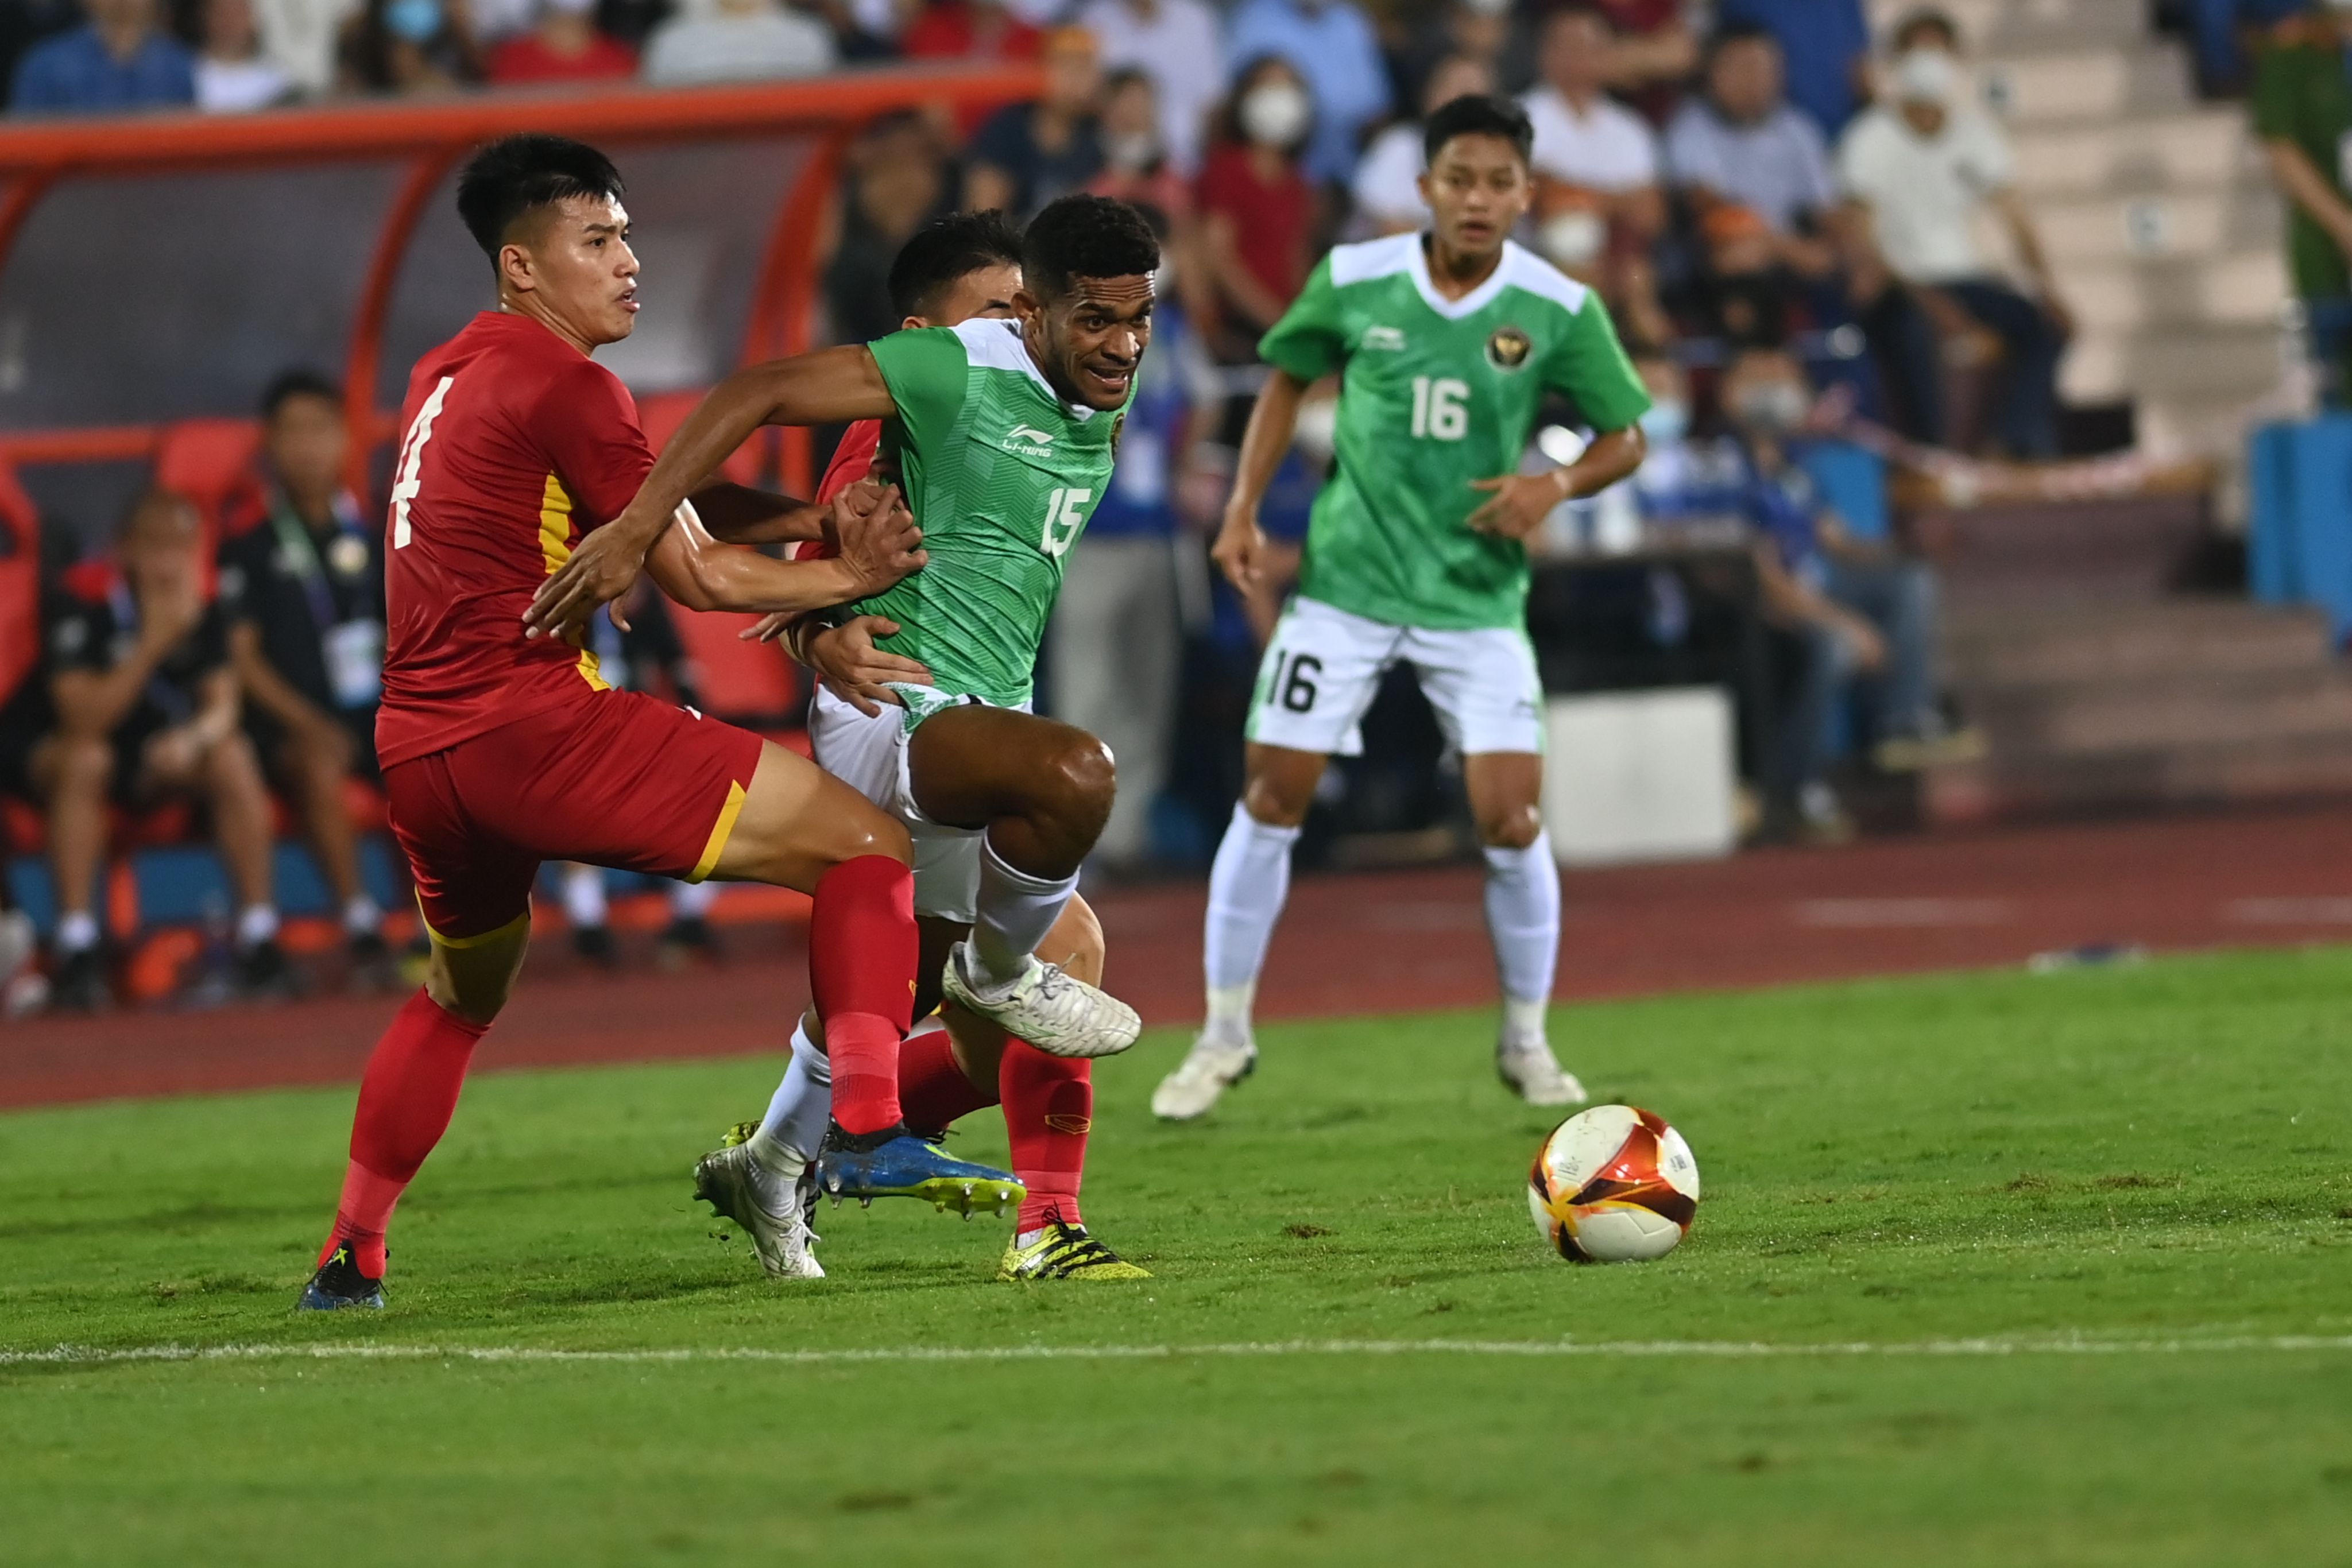 Hasil Timnas Indonesia Vs Vietnam: Garuda Muda Tak Berdaya Takluk 0-3